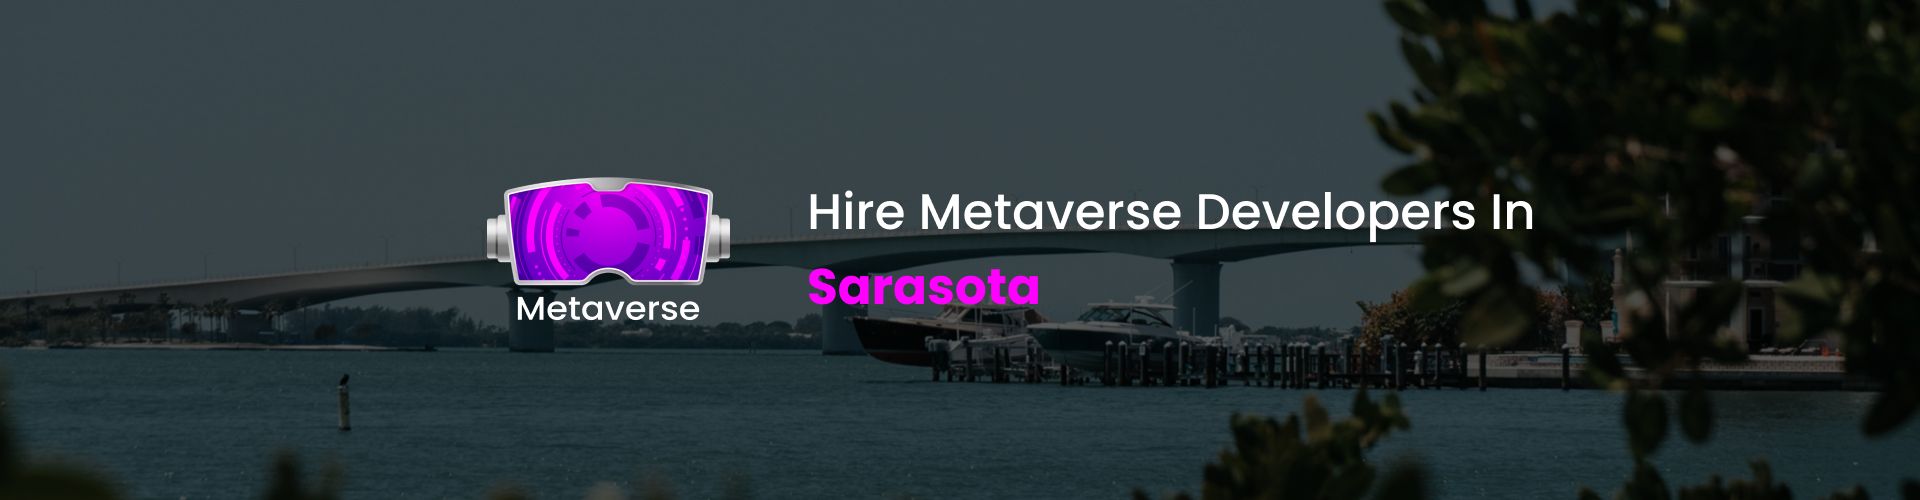 hire metaverse developers in sarasota